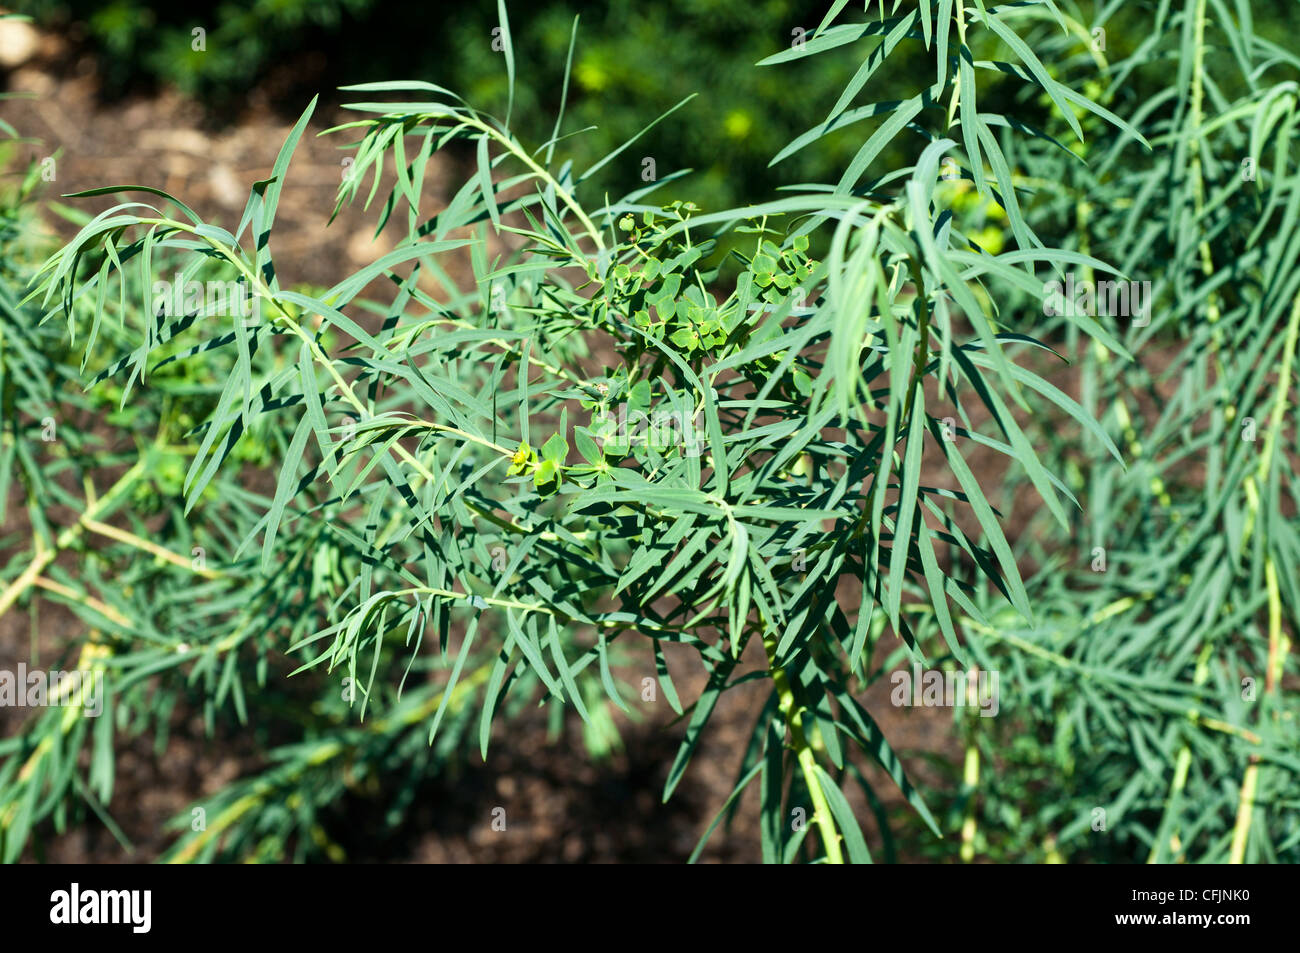 Leafy spurge plant, Euphorbia esula, Euphorbiaceae Stock Photo